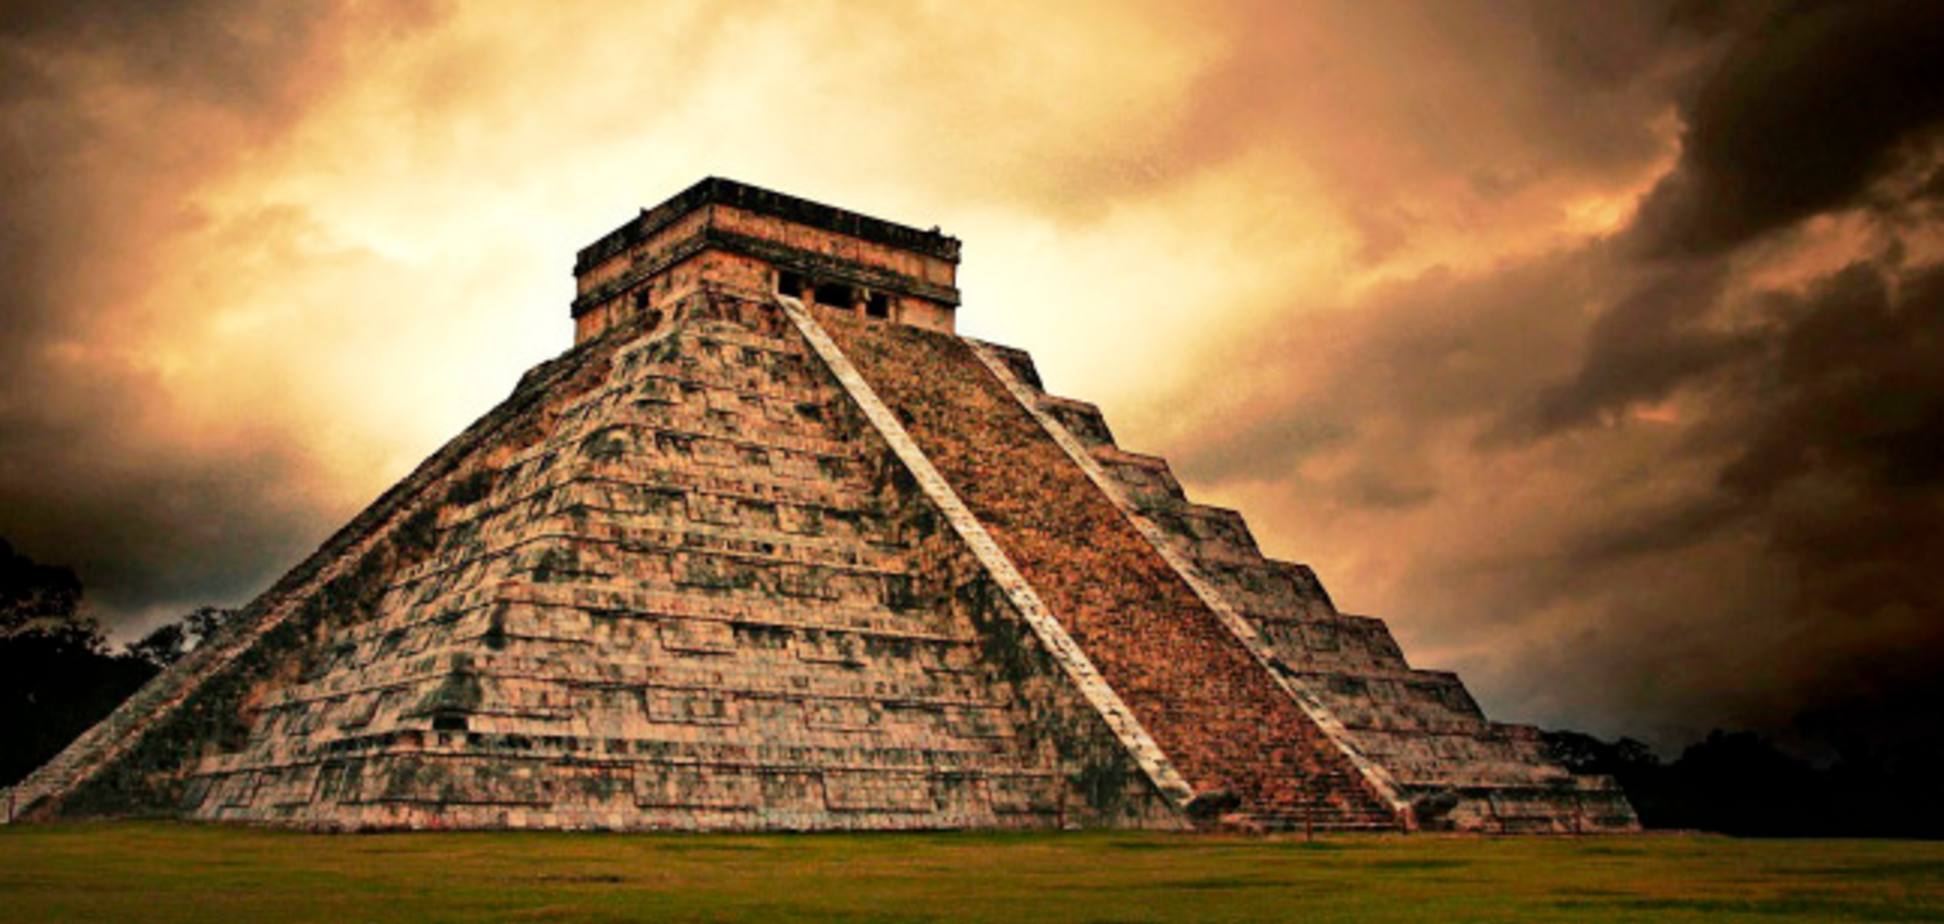 Пирамида Майя